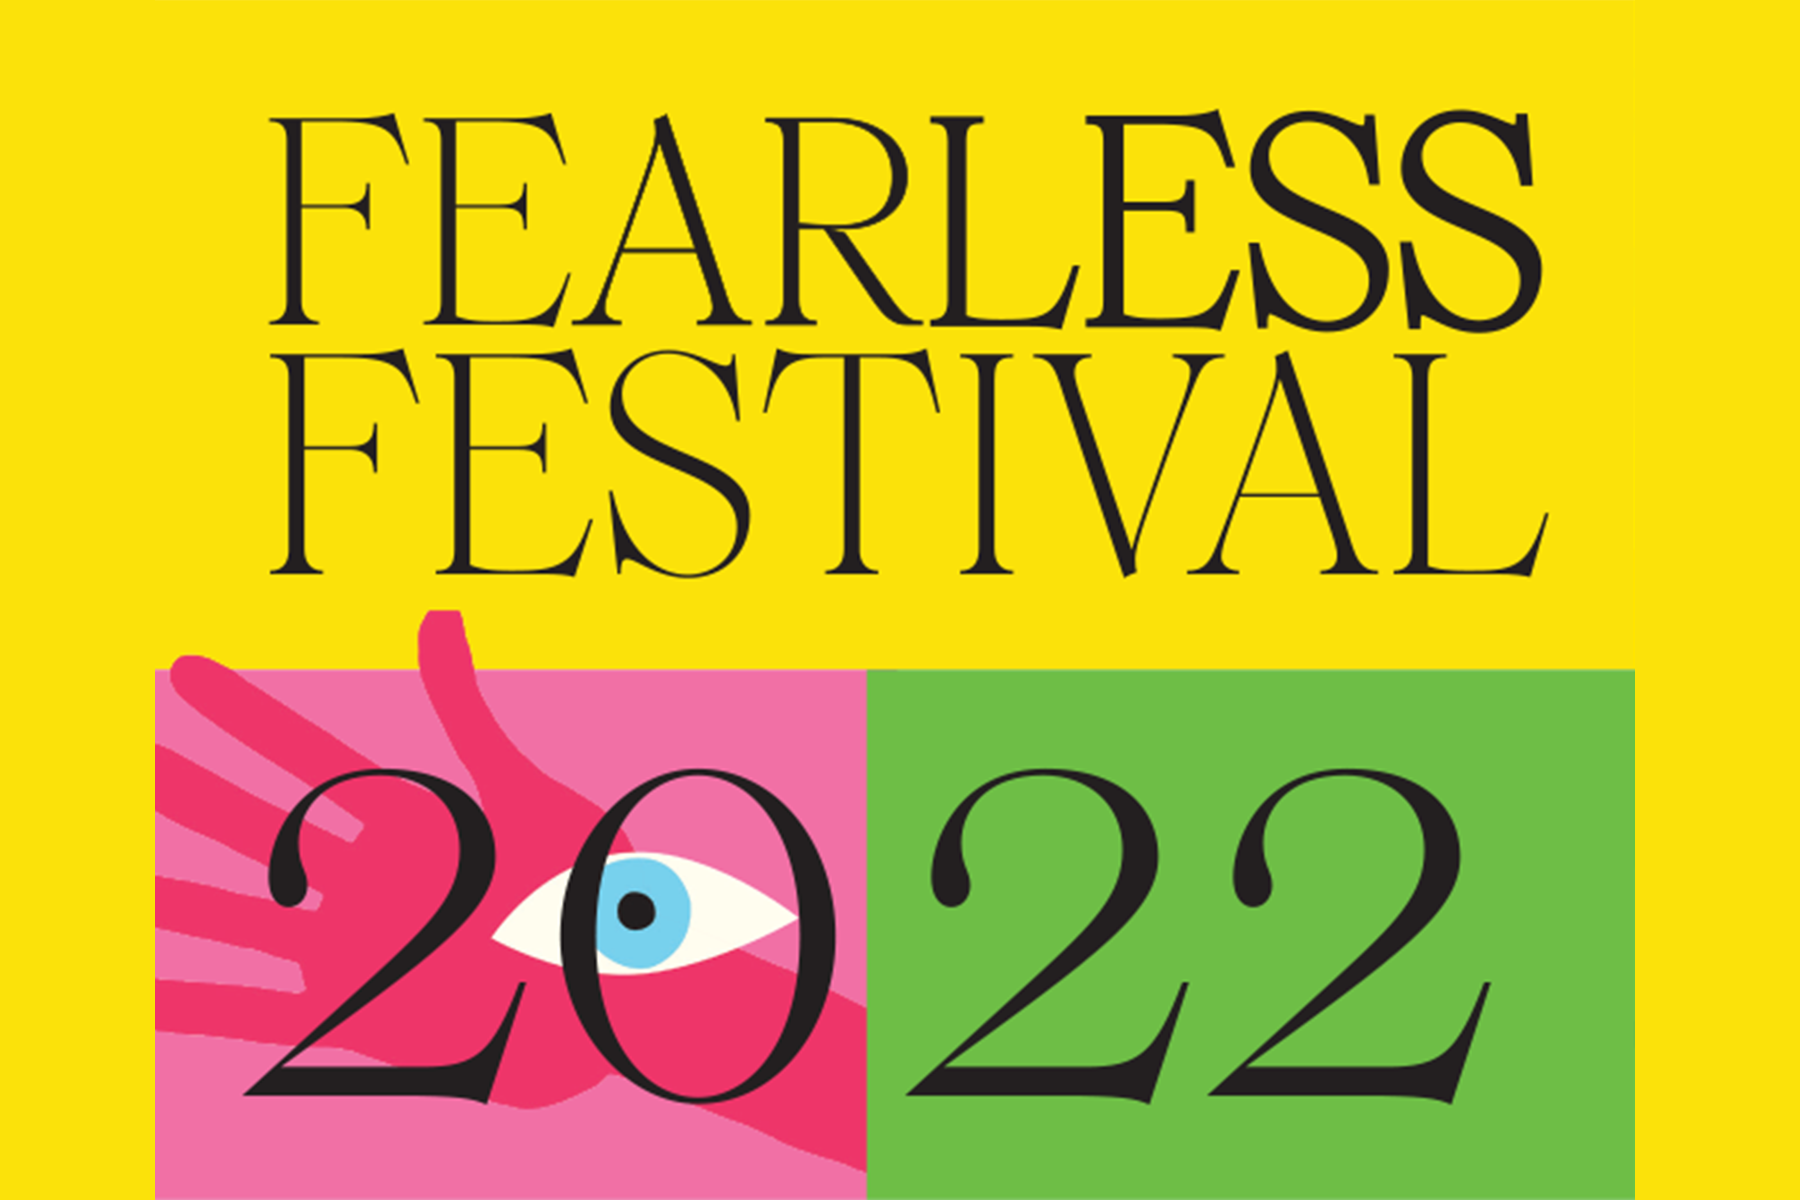 Fearless Festival logo